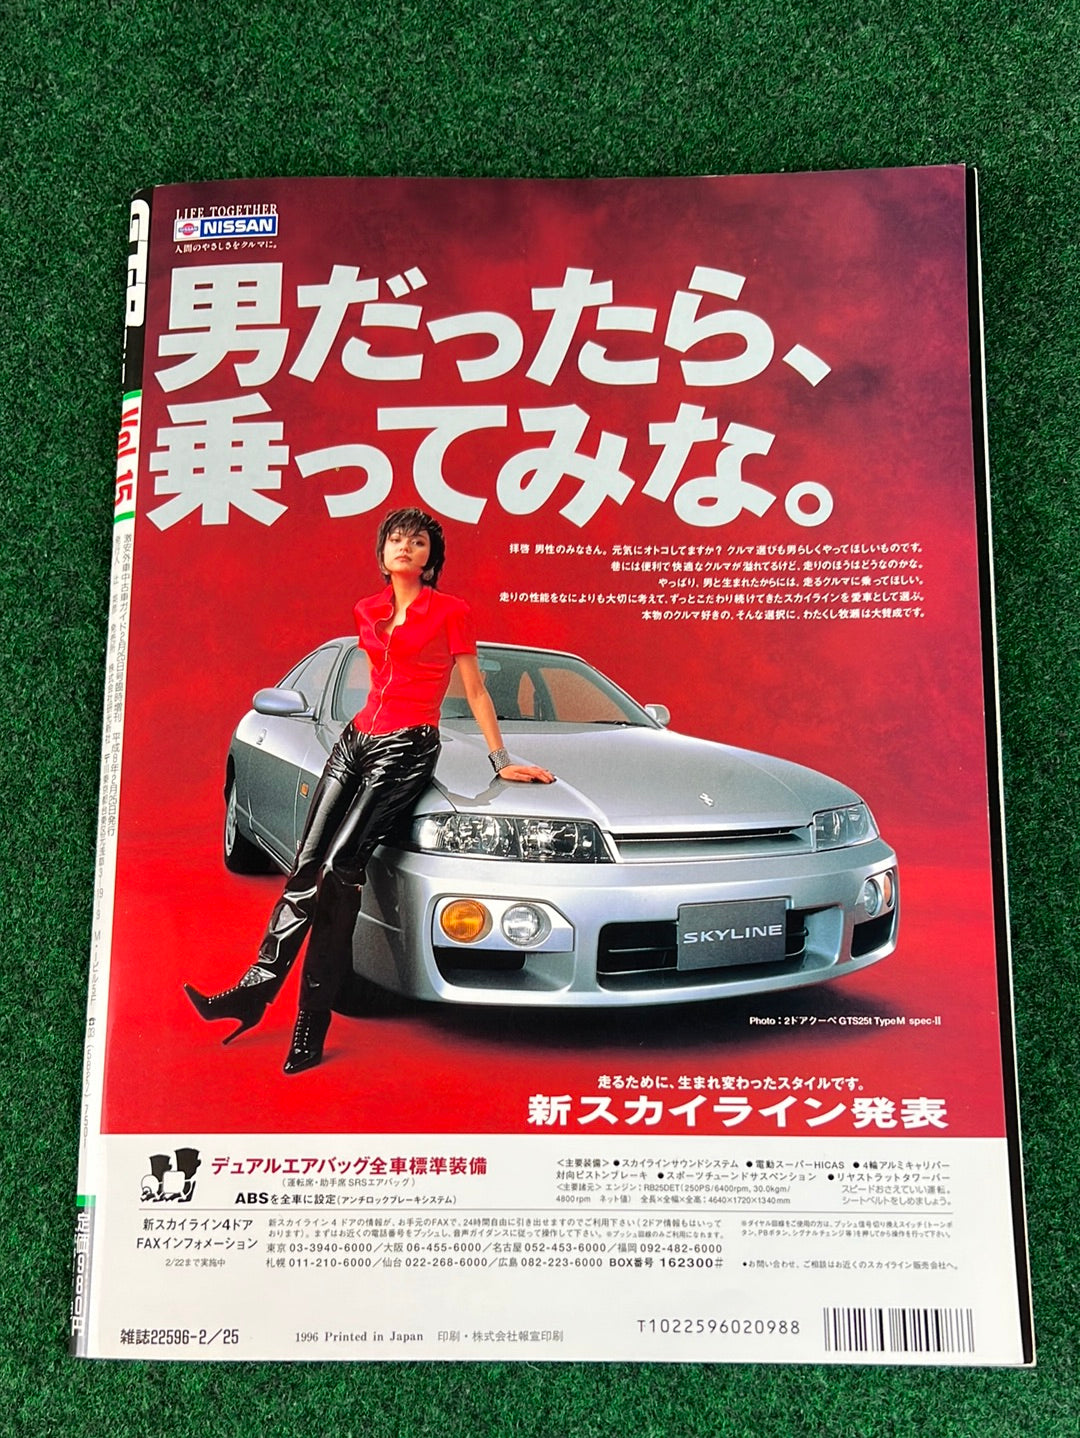 GT-R Club Magazine - Vol. 15